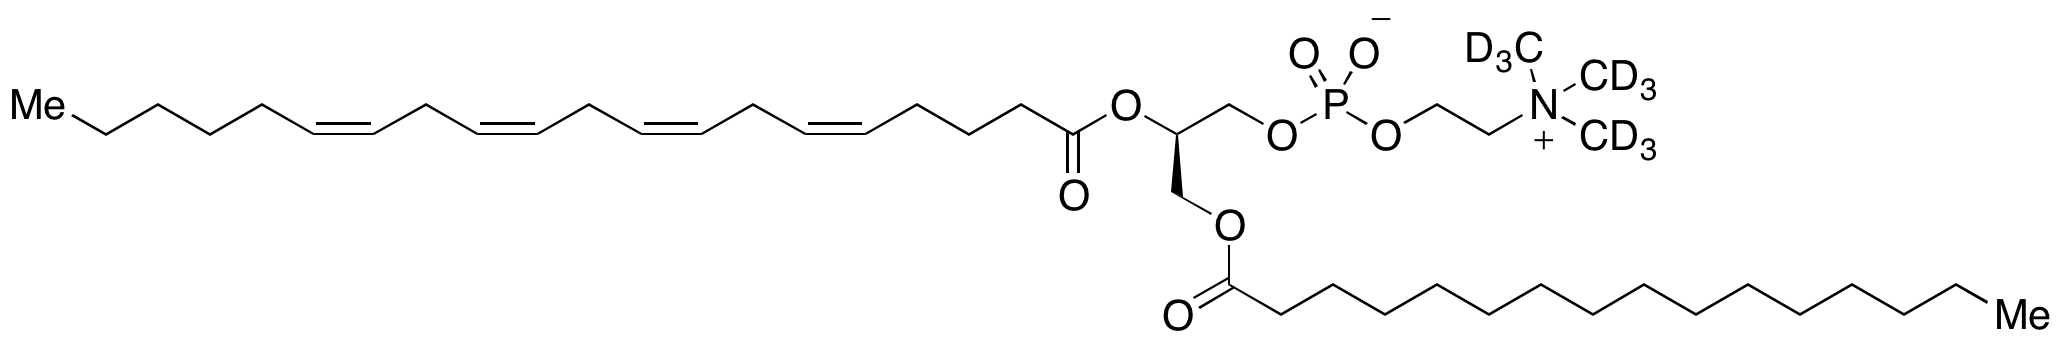 1-Palmitoyl-2-arachidoyllecithin-d<sub>9</sub>